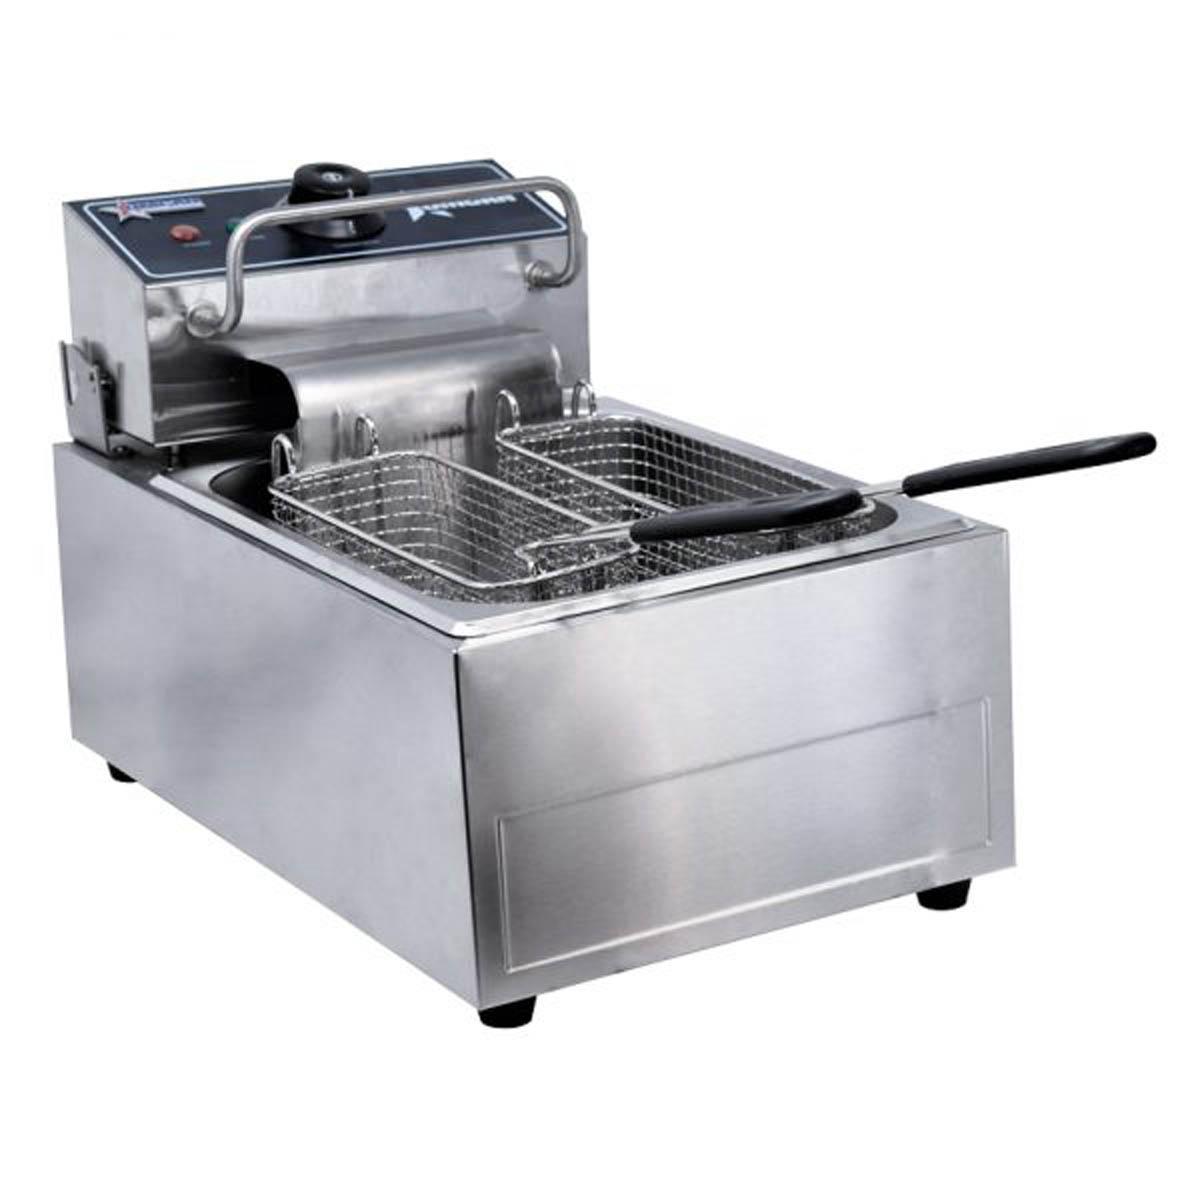 Omcan USA 39371 Full Pot Countertop Electric Fryer